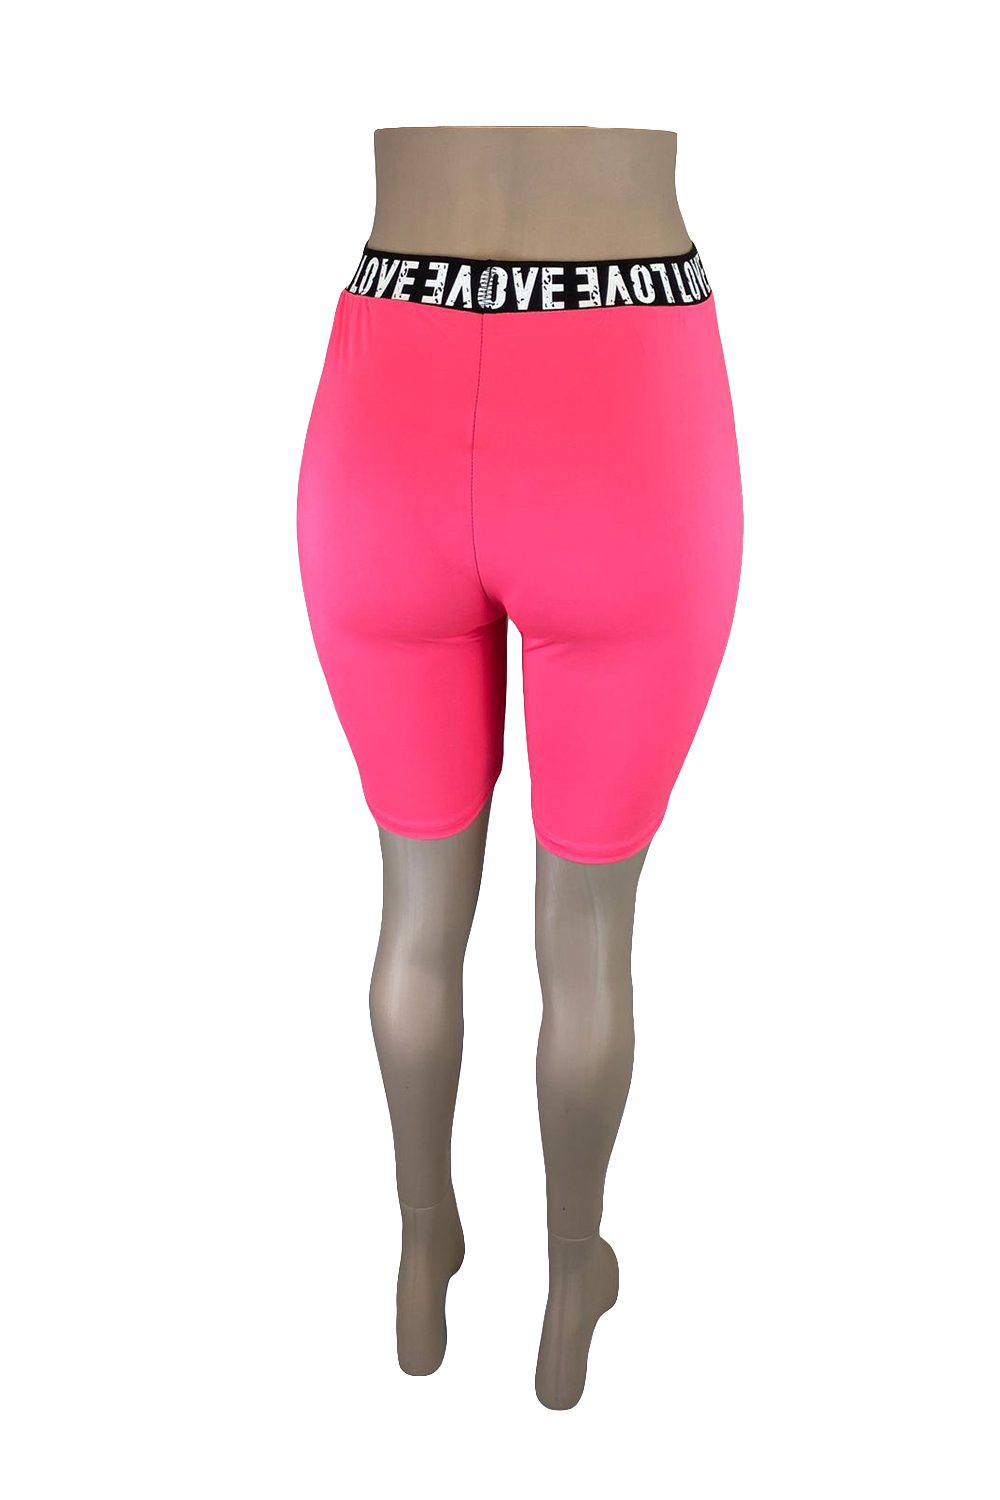 Women's Love Elastic Band Biker Shorts - Neon Pink